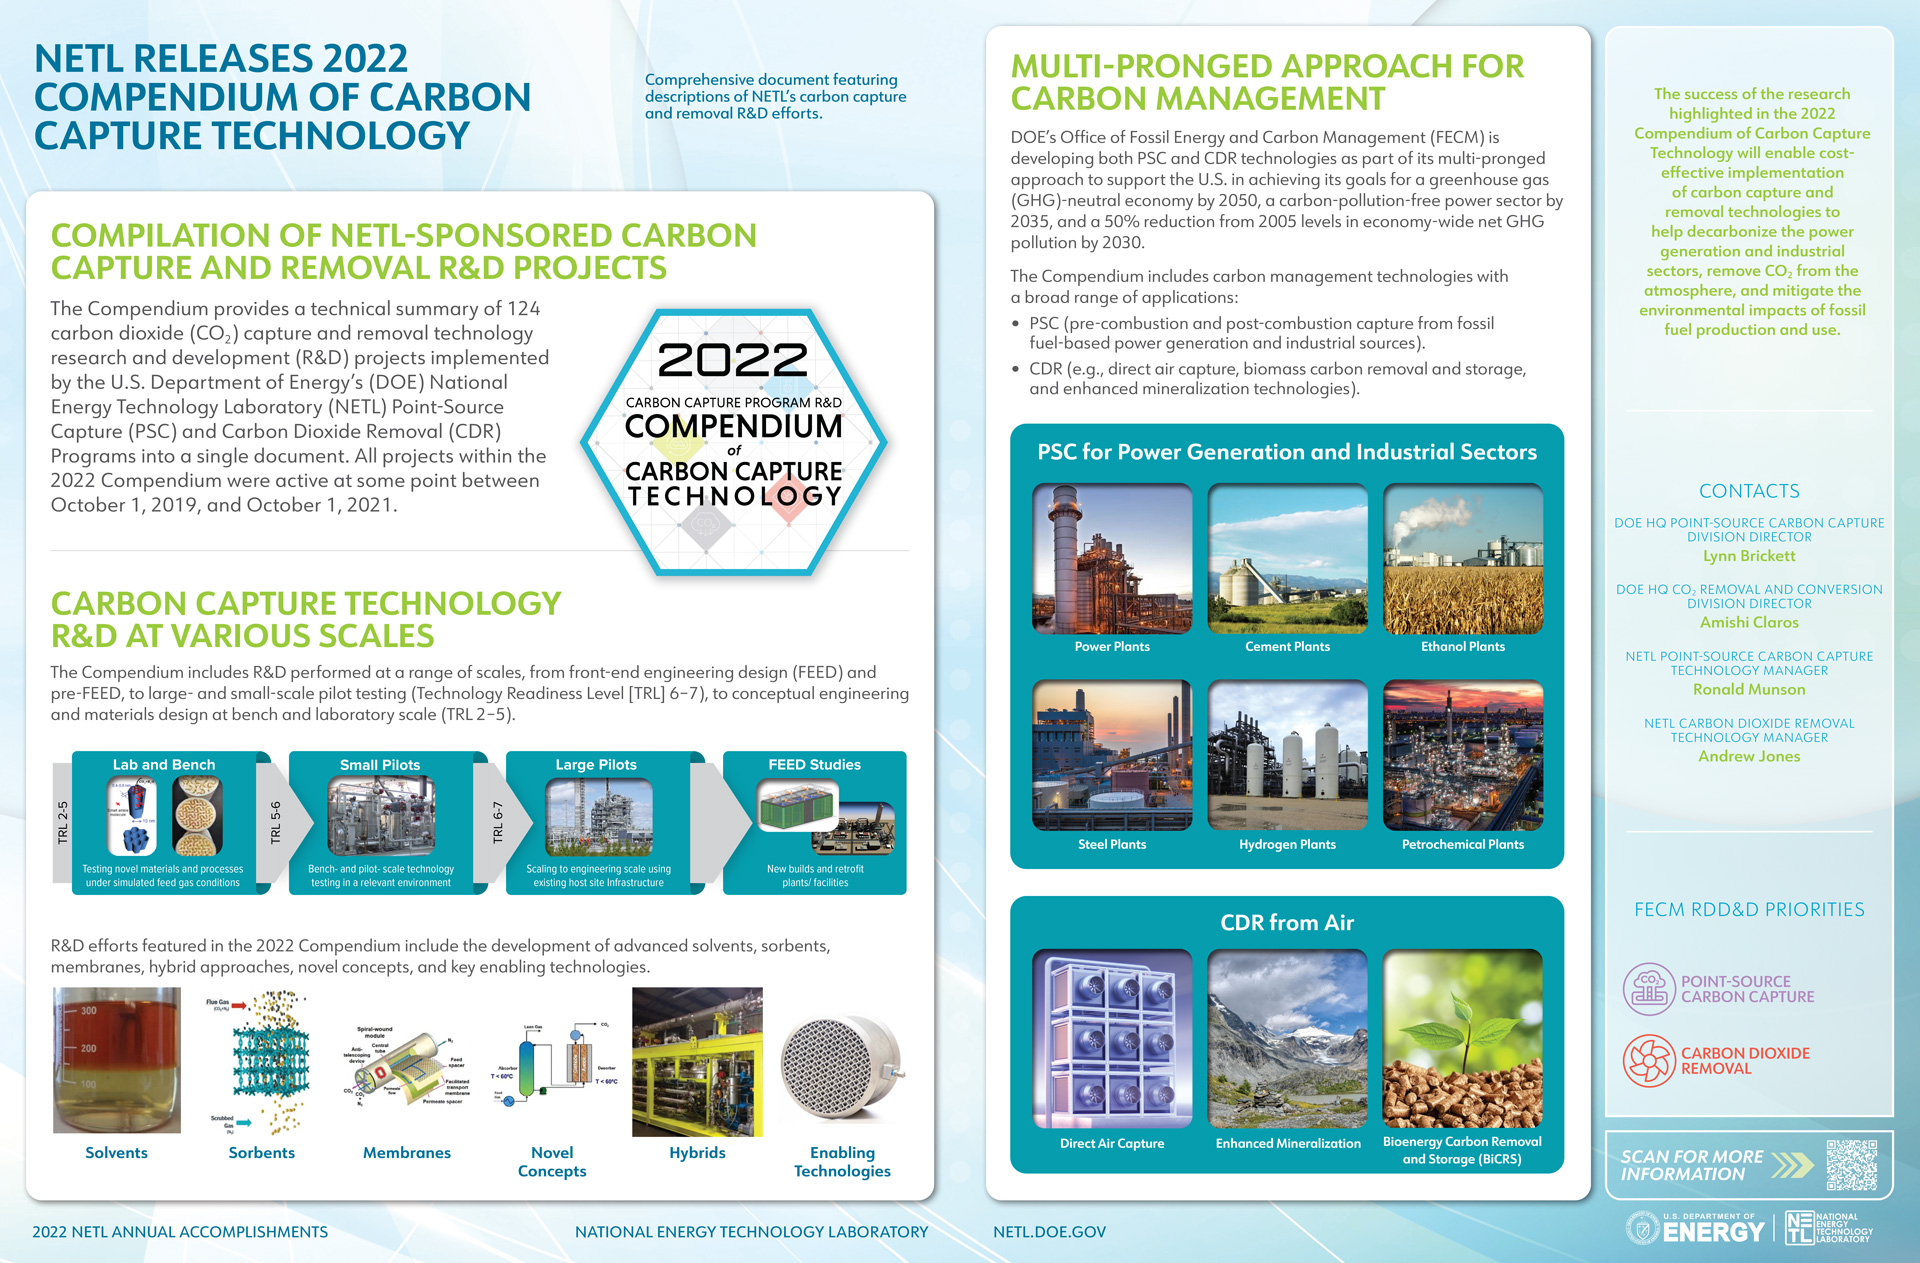 NETL Releases 2022 Compendium of Carbon Capture Technology